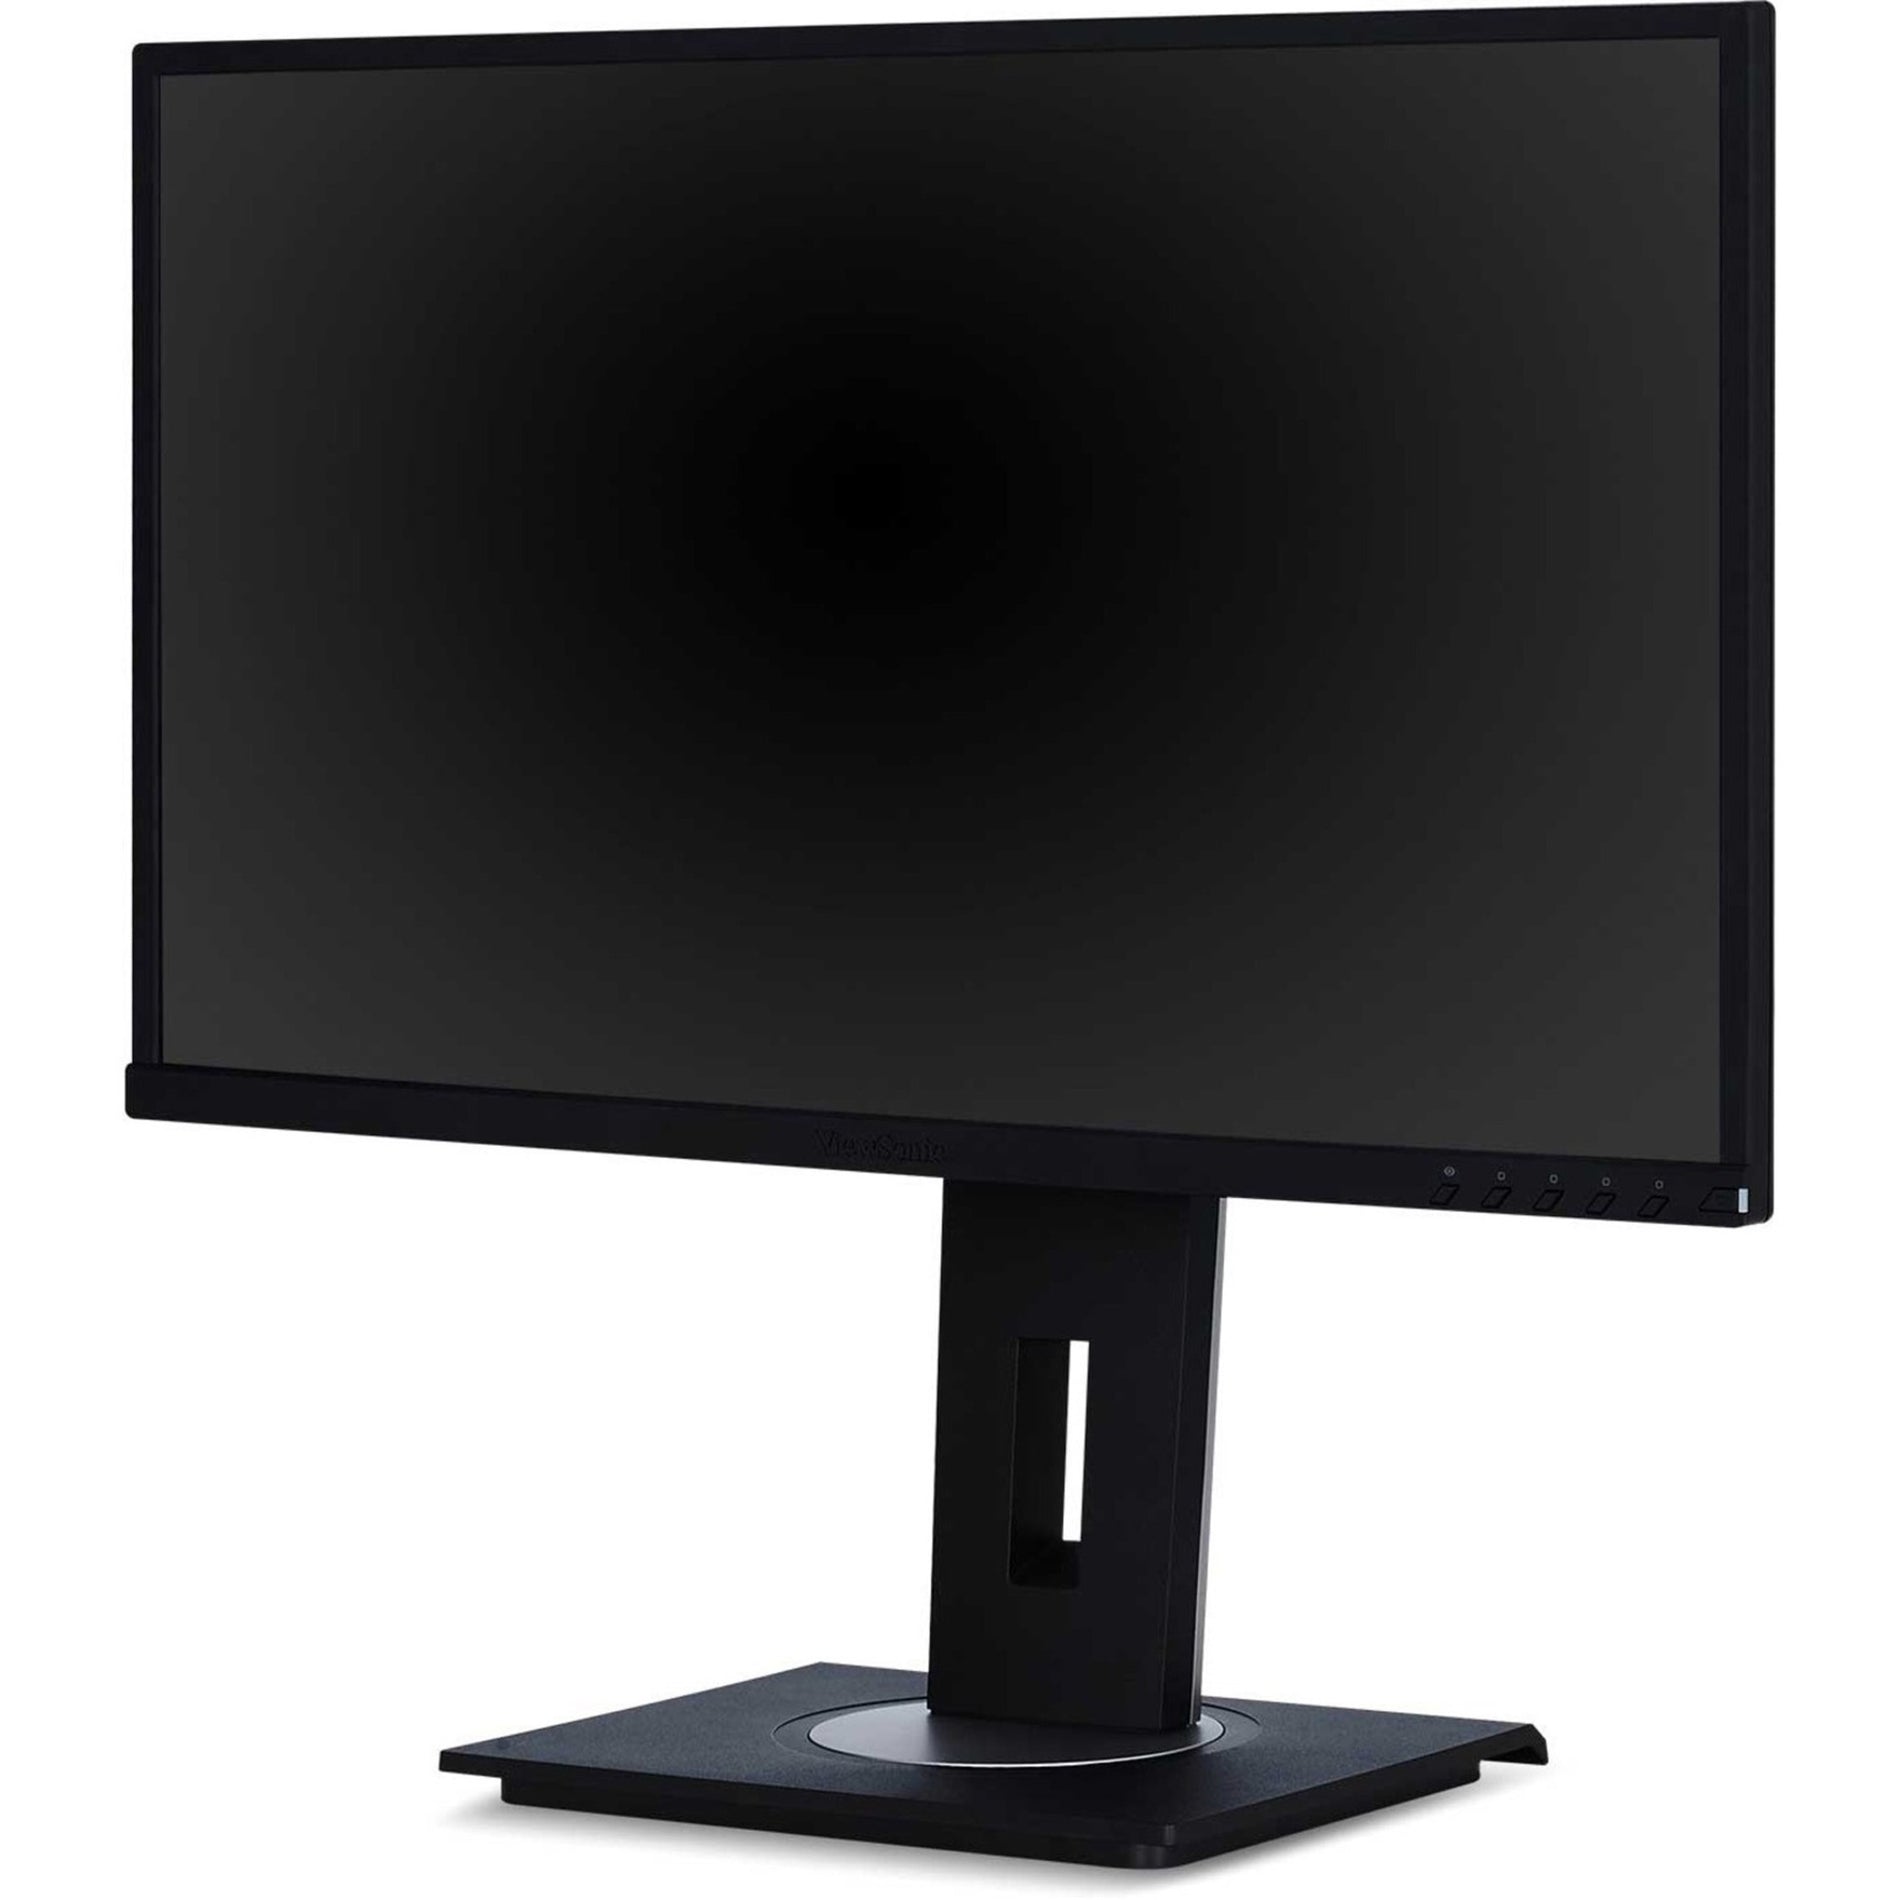 ViewSonic VG2248 Widescreen LCD Monitor, Full HD, Advanced Ergonomics